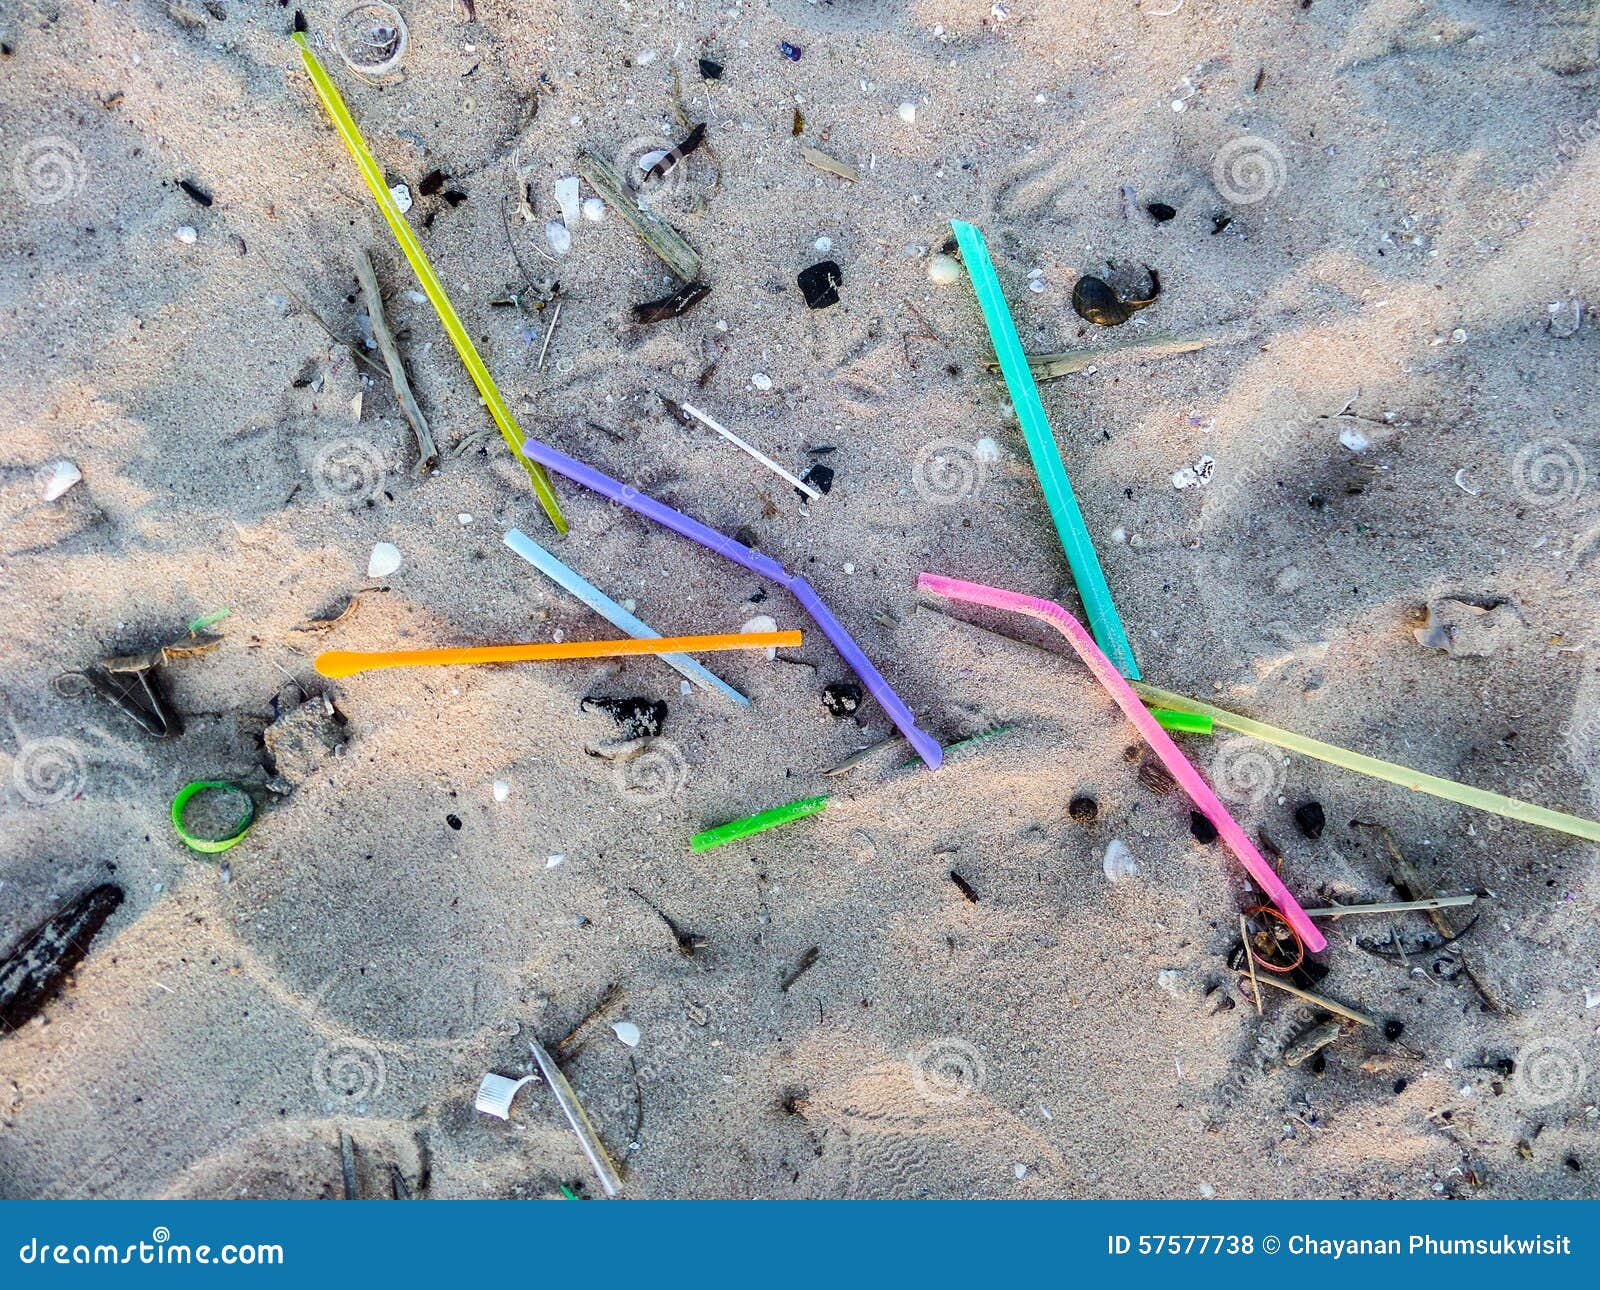 straws are waste on beach